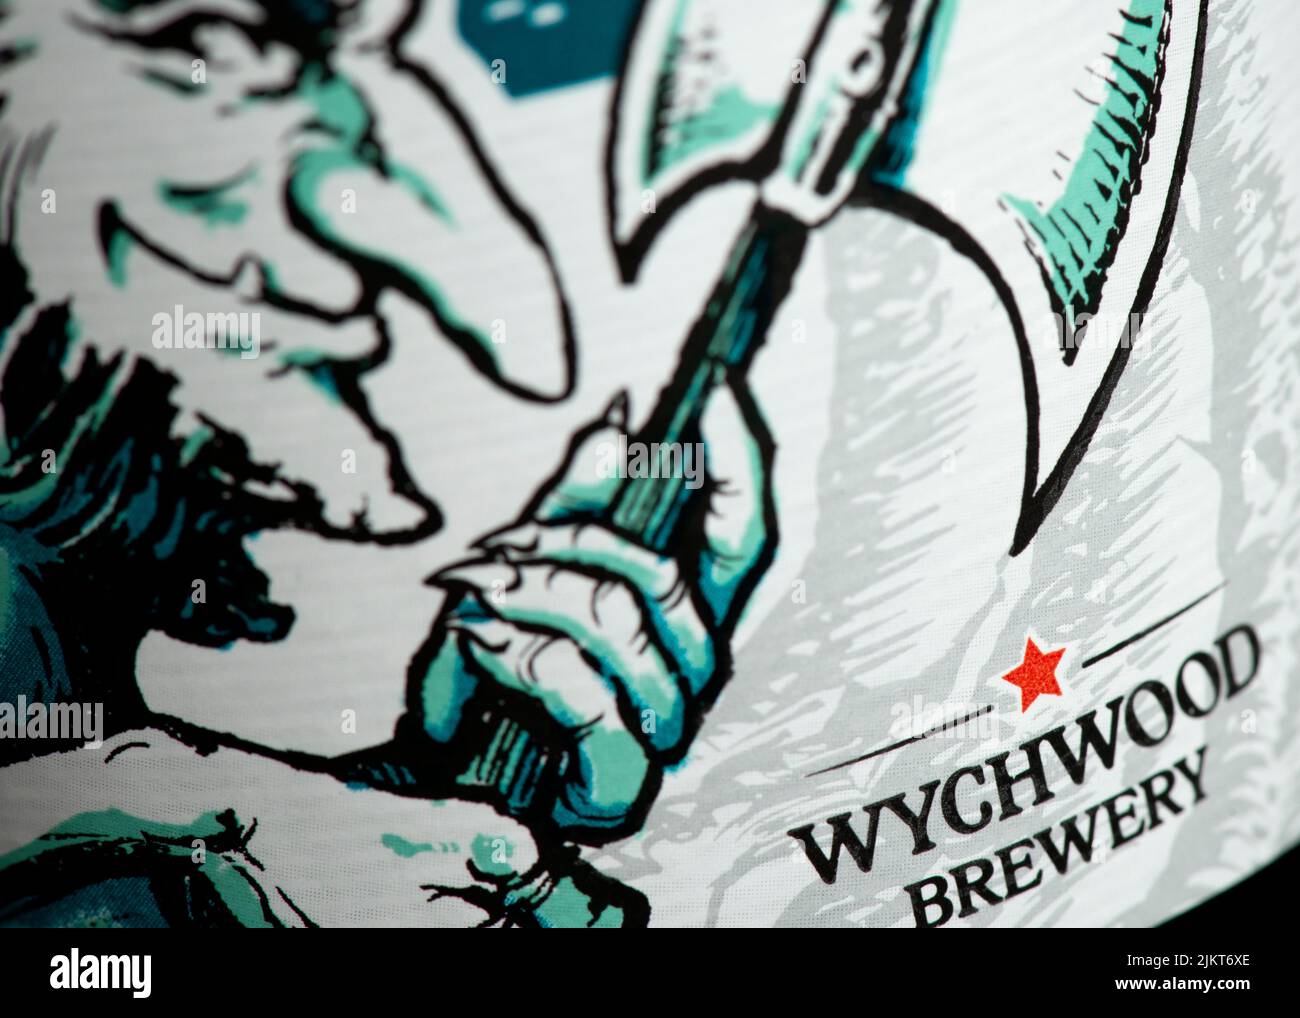 Wychwood Brewery logo on Hobgoblin British IPA beer label Stock Photo